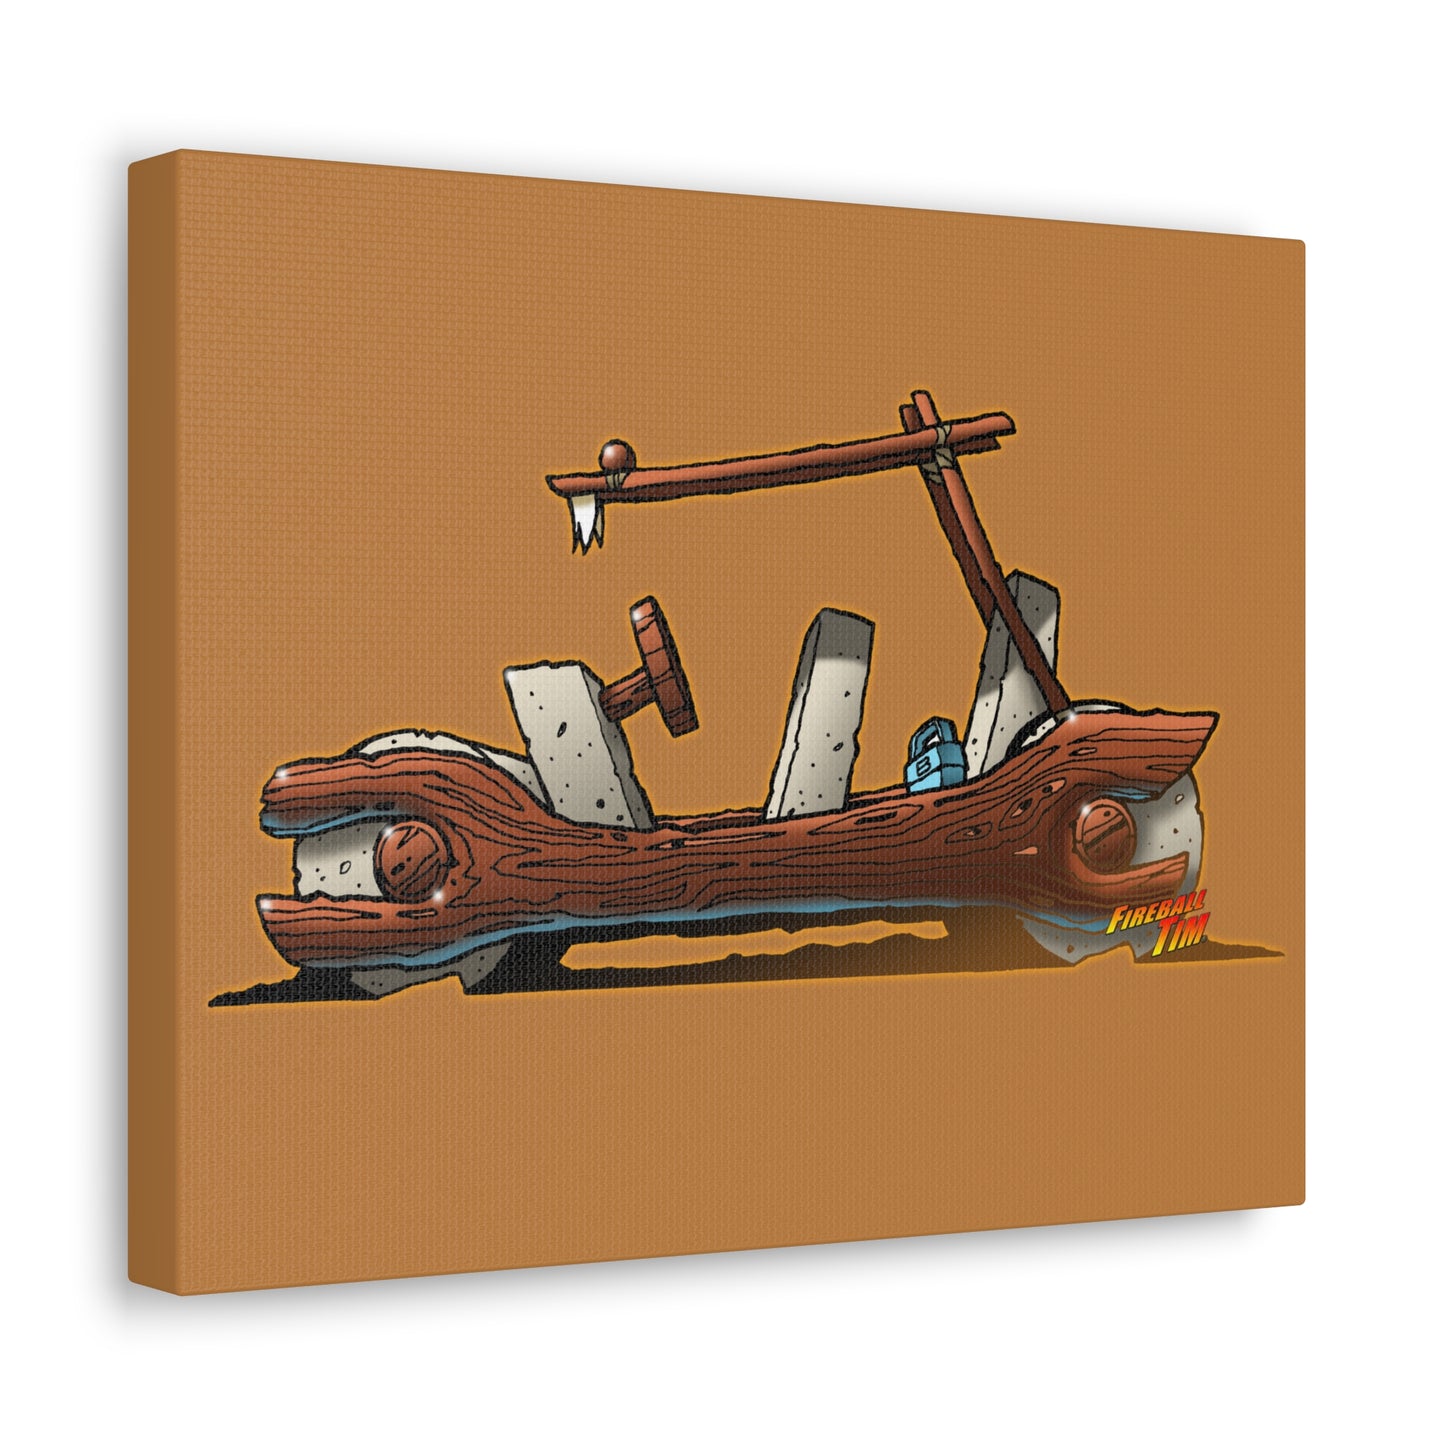 THE FLINTSTONES Bedrock Roadster TV Car Canvas Gallery Art Print 11x14